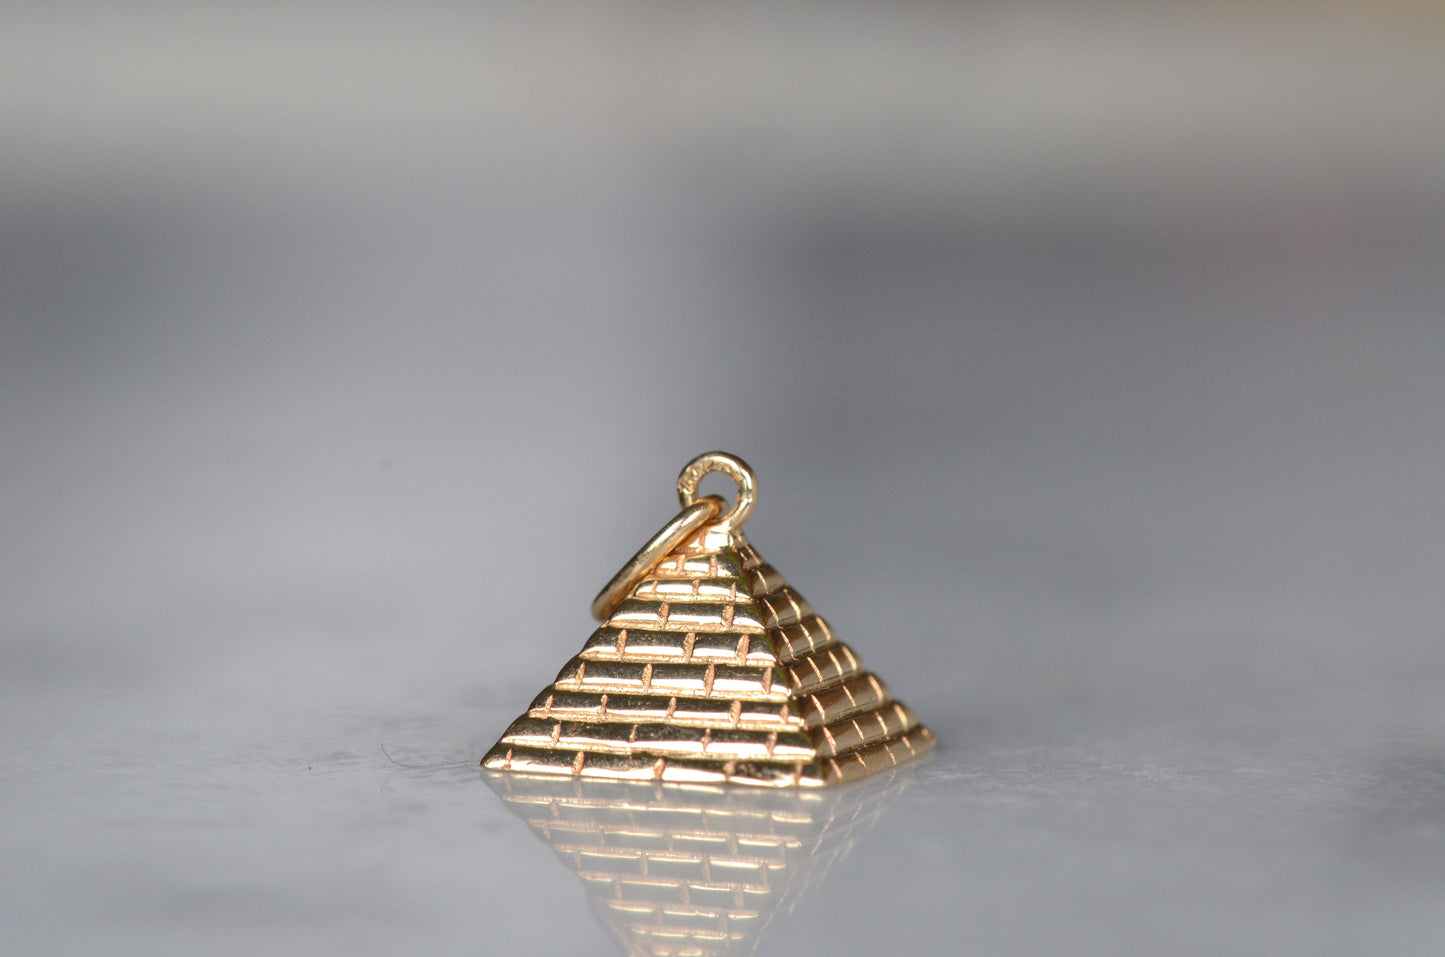 Miniature Vintage Gold Pyramid Charm